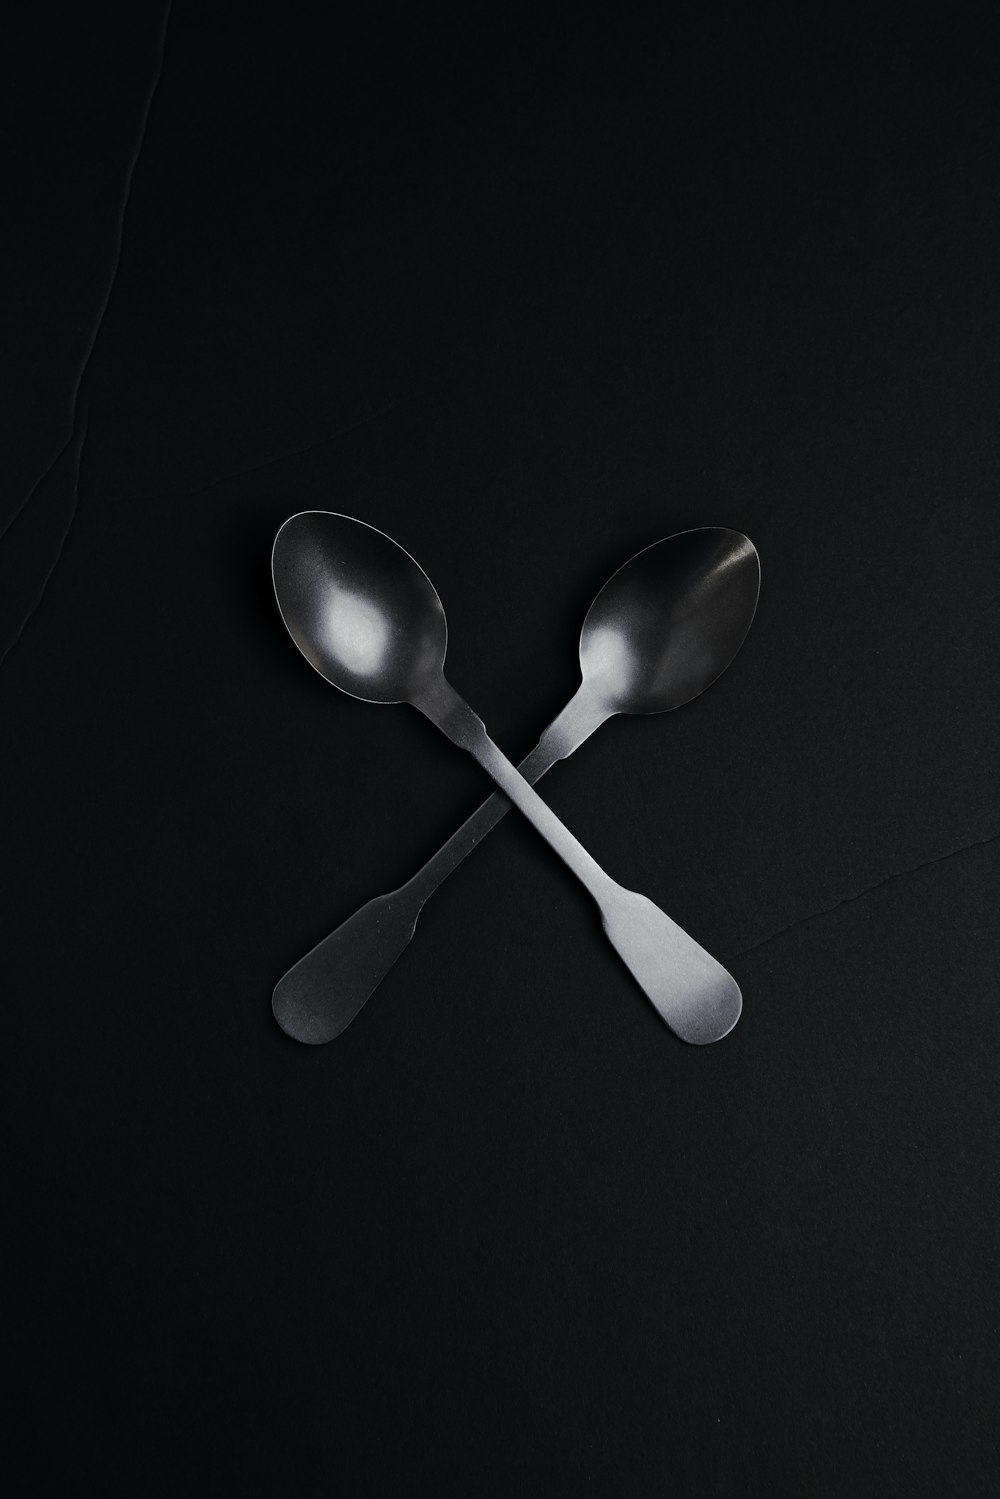 silver spoon on black textile